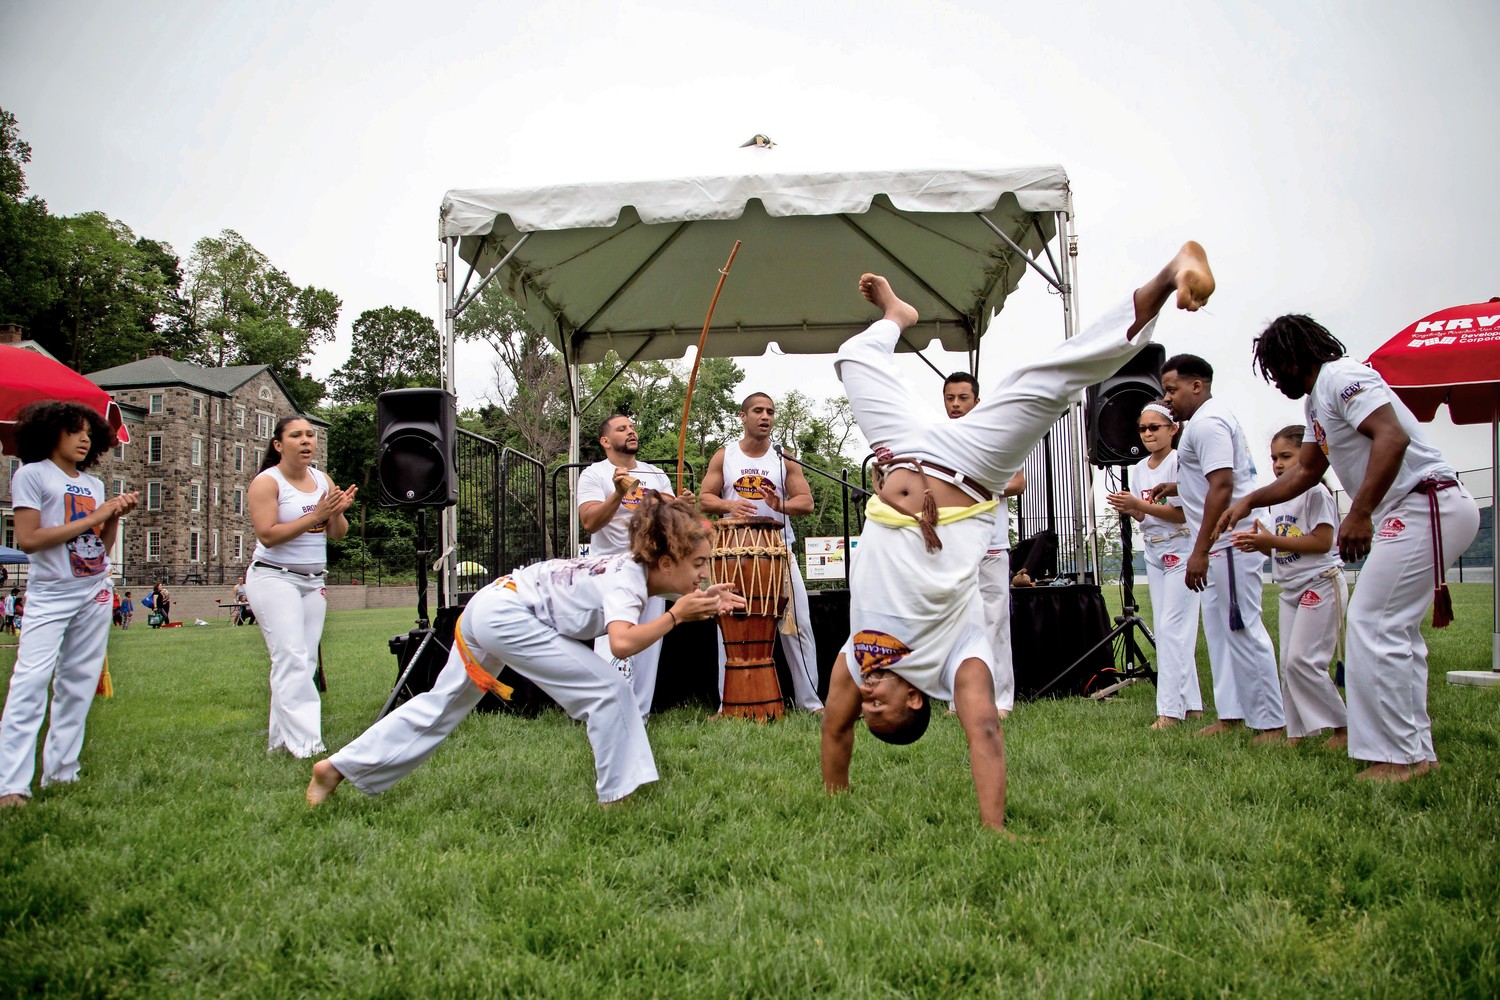 The Abada-Capoeira Bronx Cultural Arts Center performs capoeira, a Brazilian martial art that combines elements of dance, acrobatics, and self-defense techniques, during RiverFestBX.